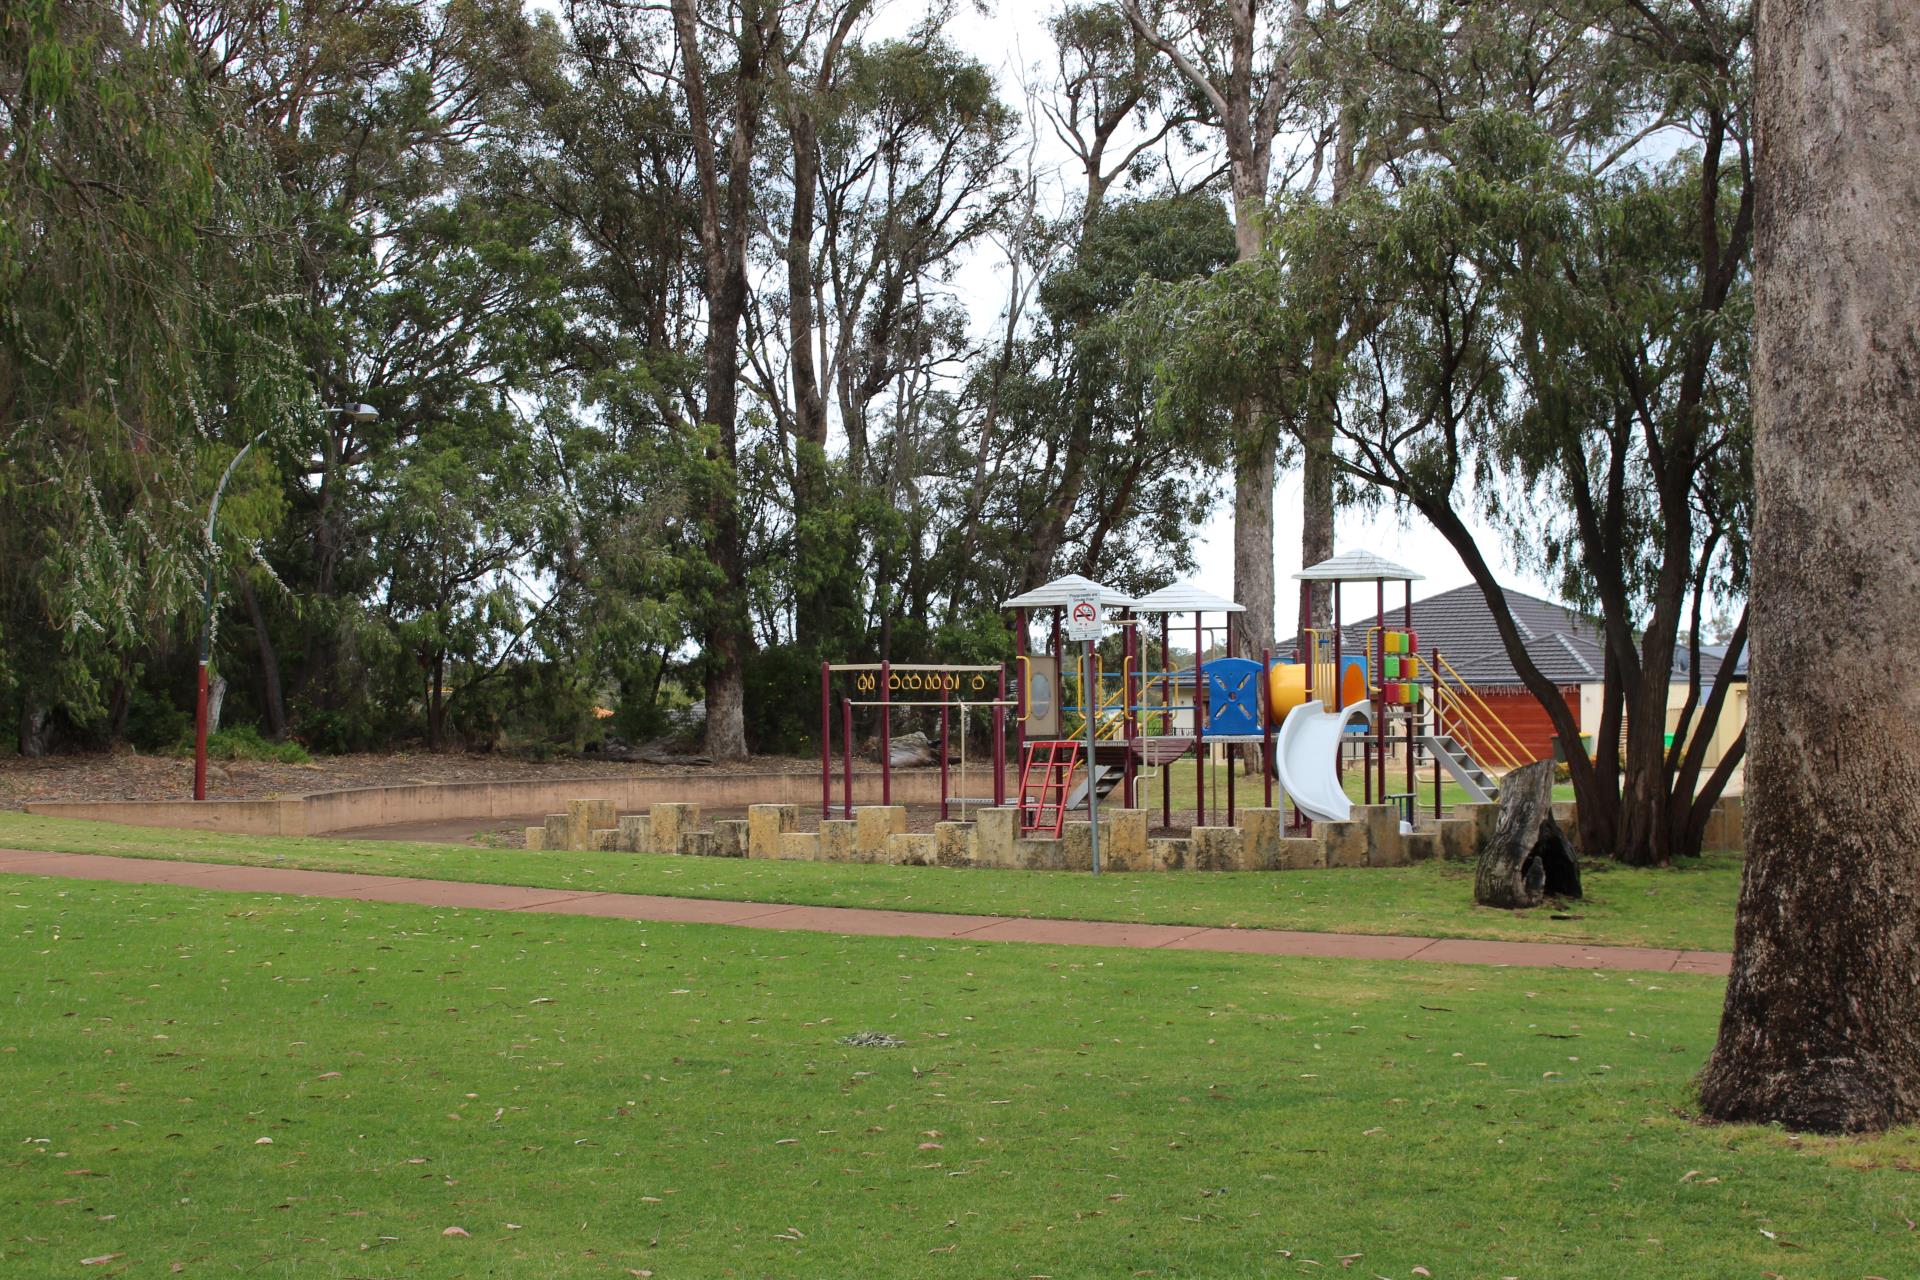 Lawson park central playground